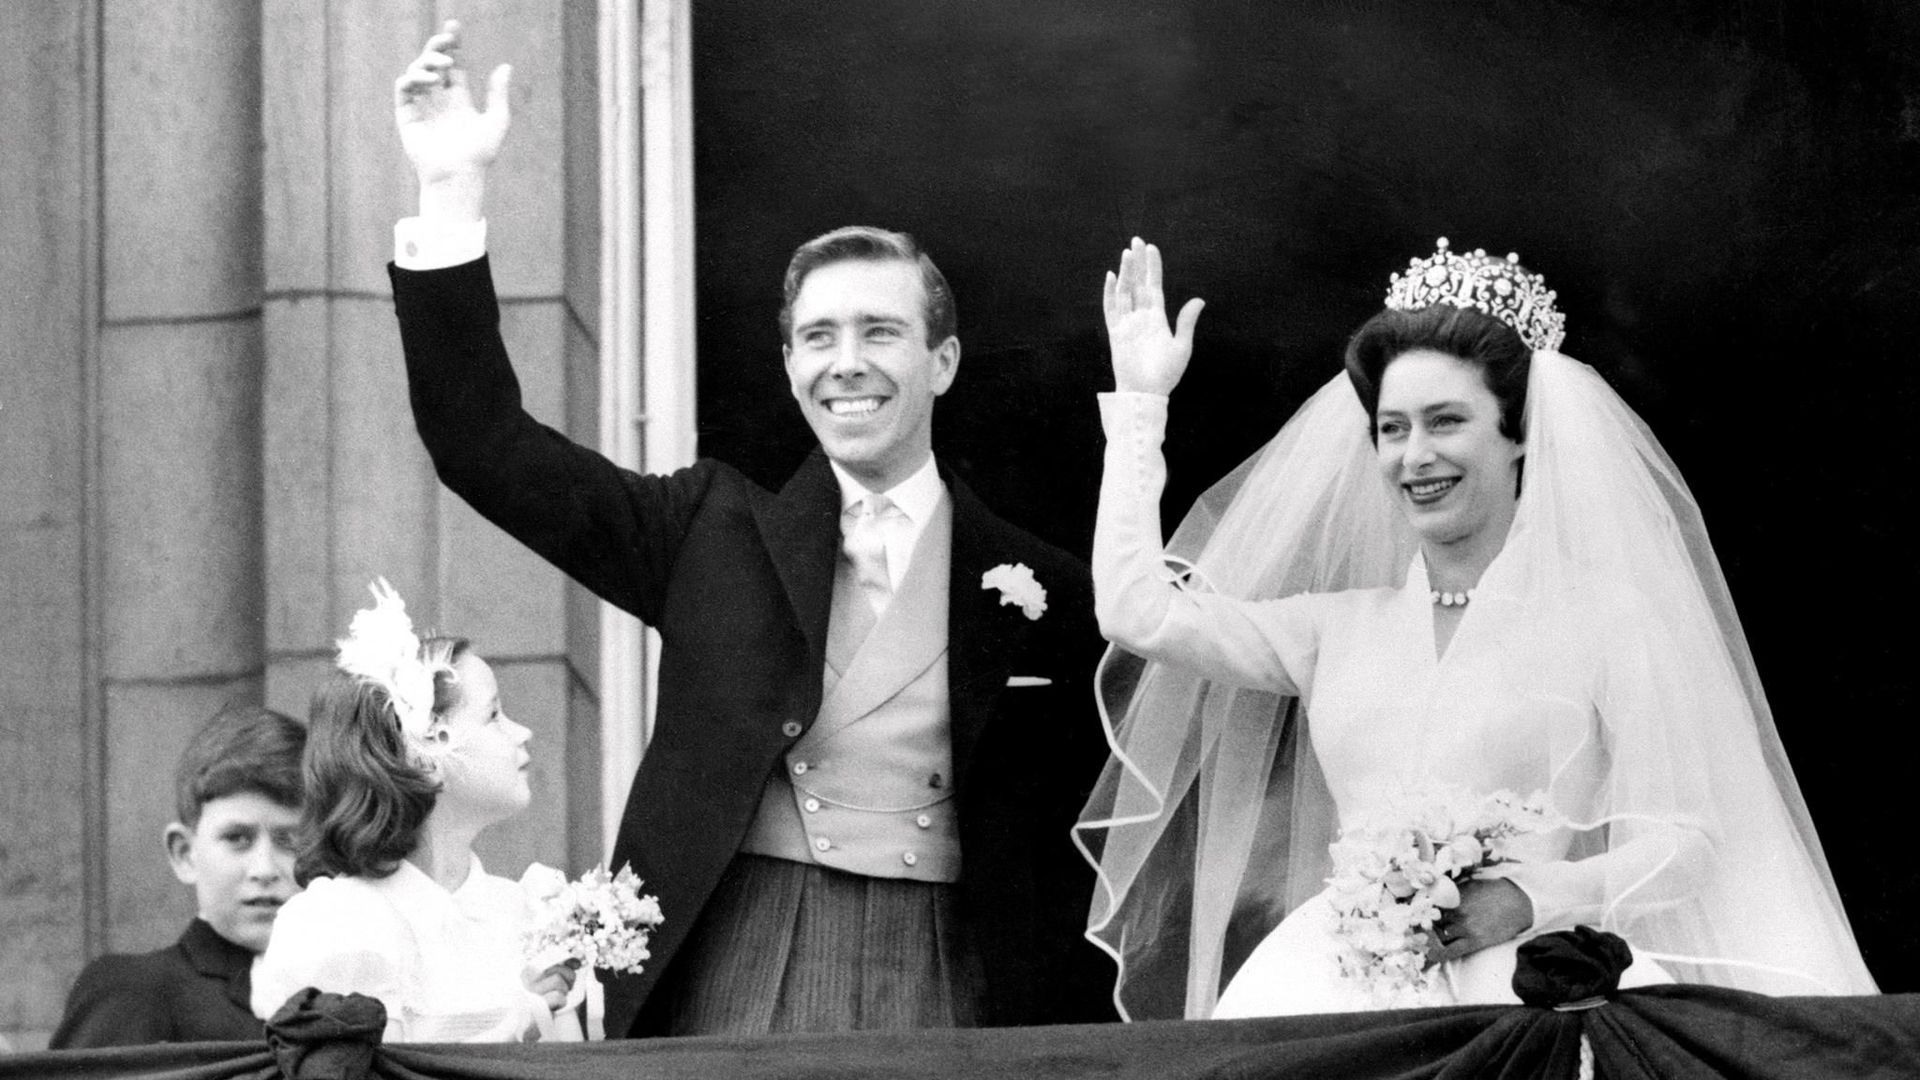 Le mariage de la princesse Margaret avec Antony Armstrong-Jones le 6 mai 1960